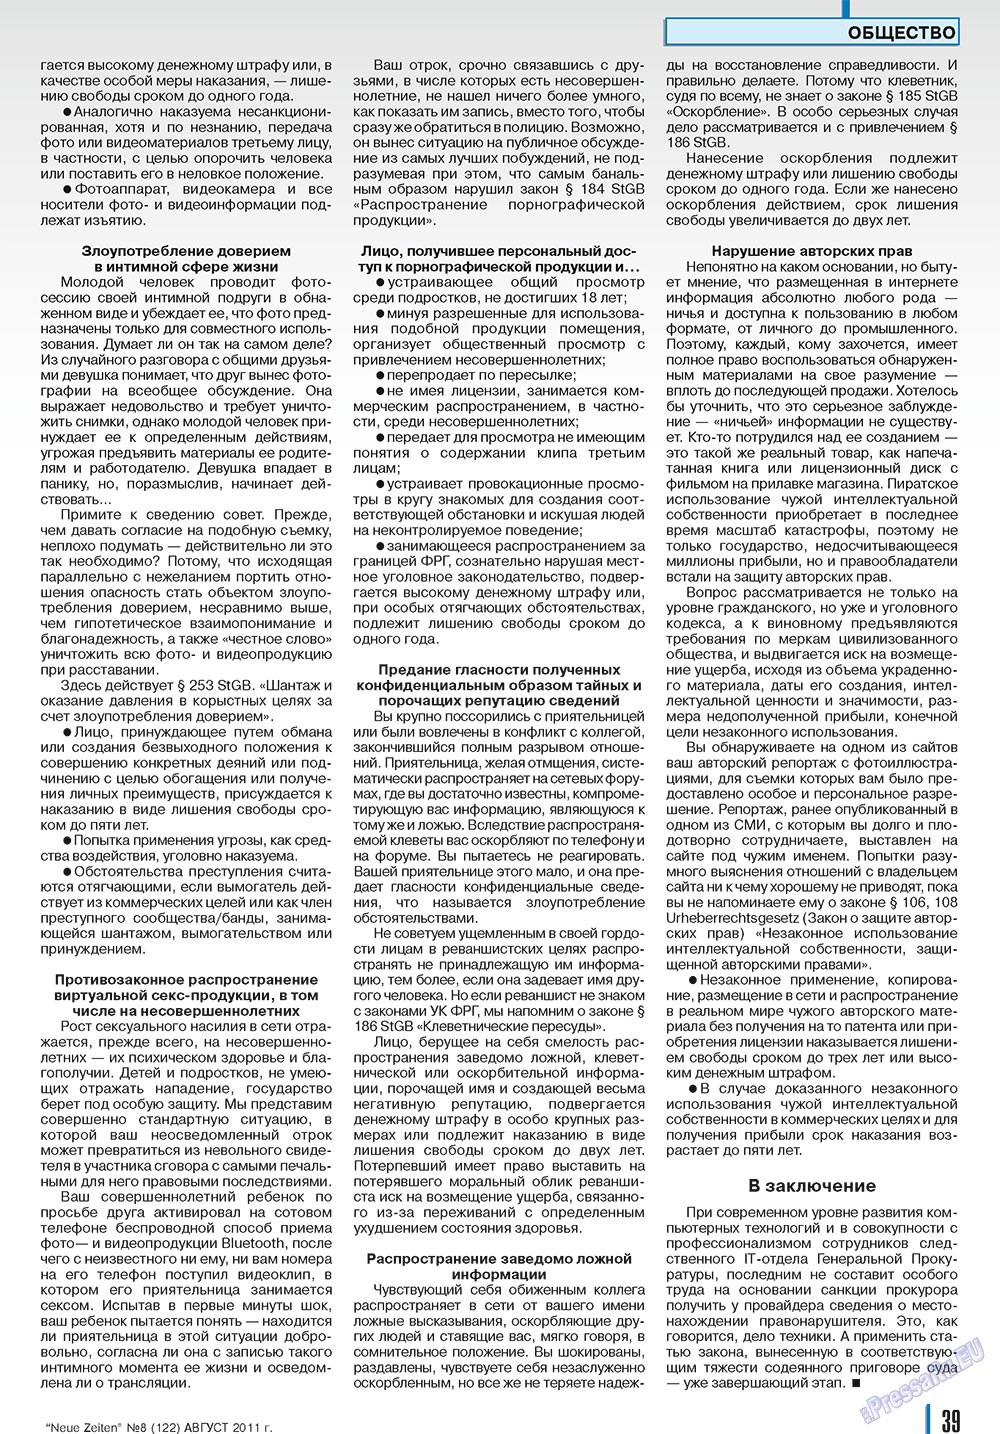 Neue Zeiten (журнал). 2011 год, номер 8, стр. 39